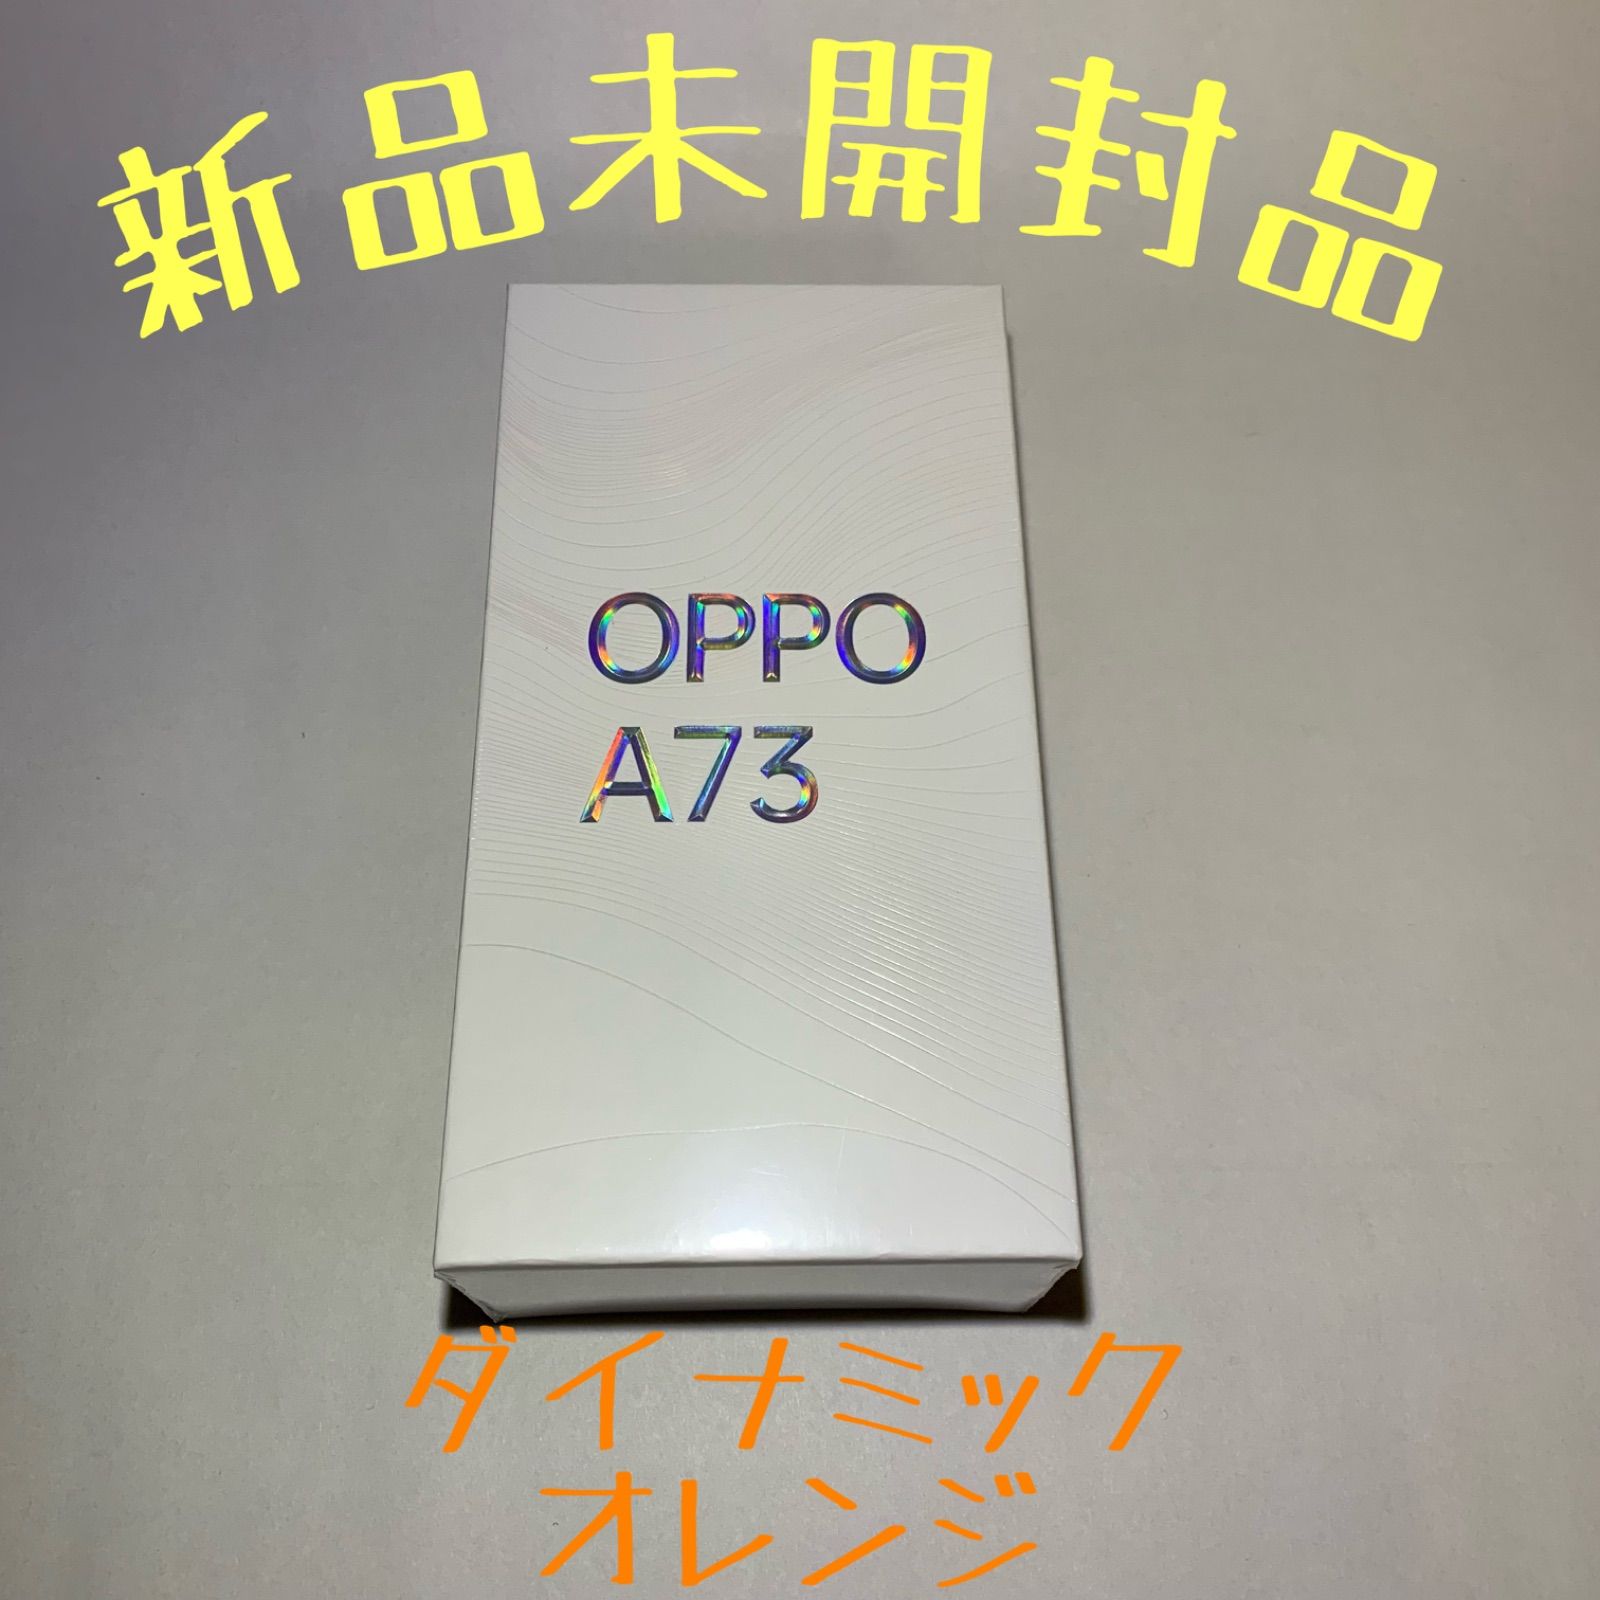 OPPO A73 simフリースマートフォン ダイナミックオレンジ - KTM ...